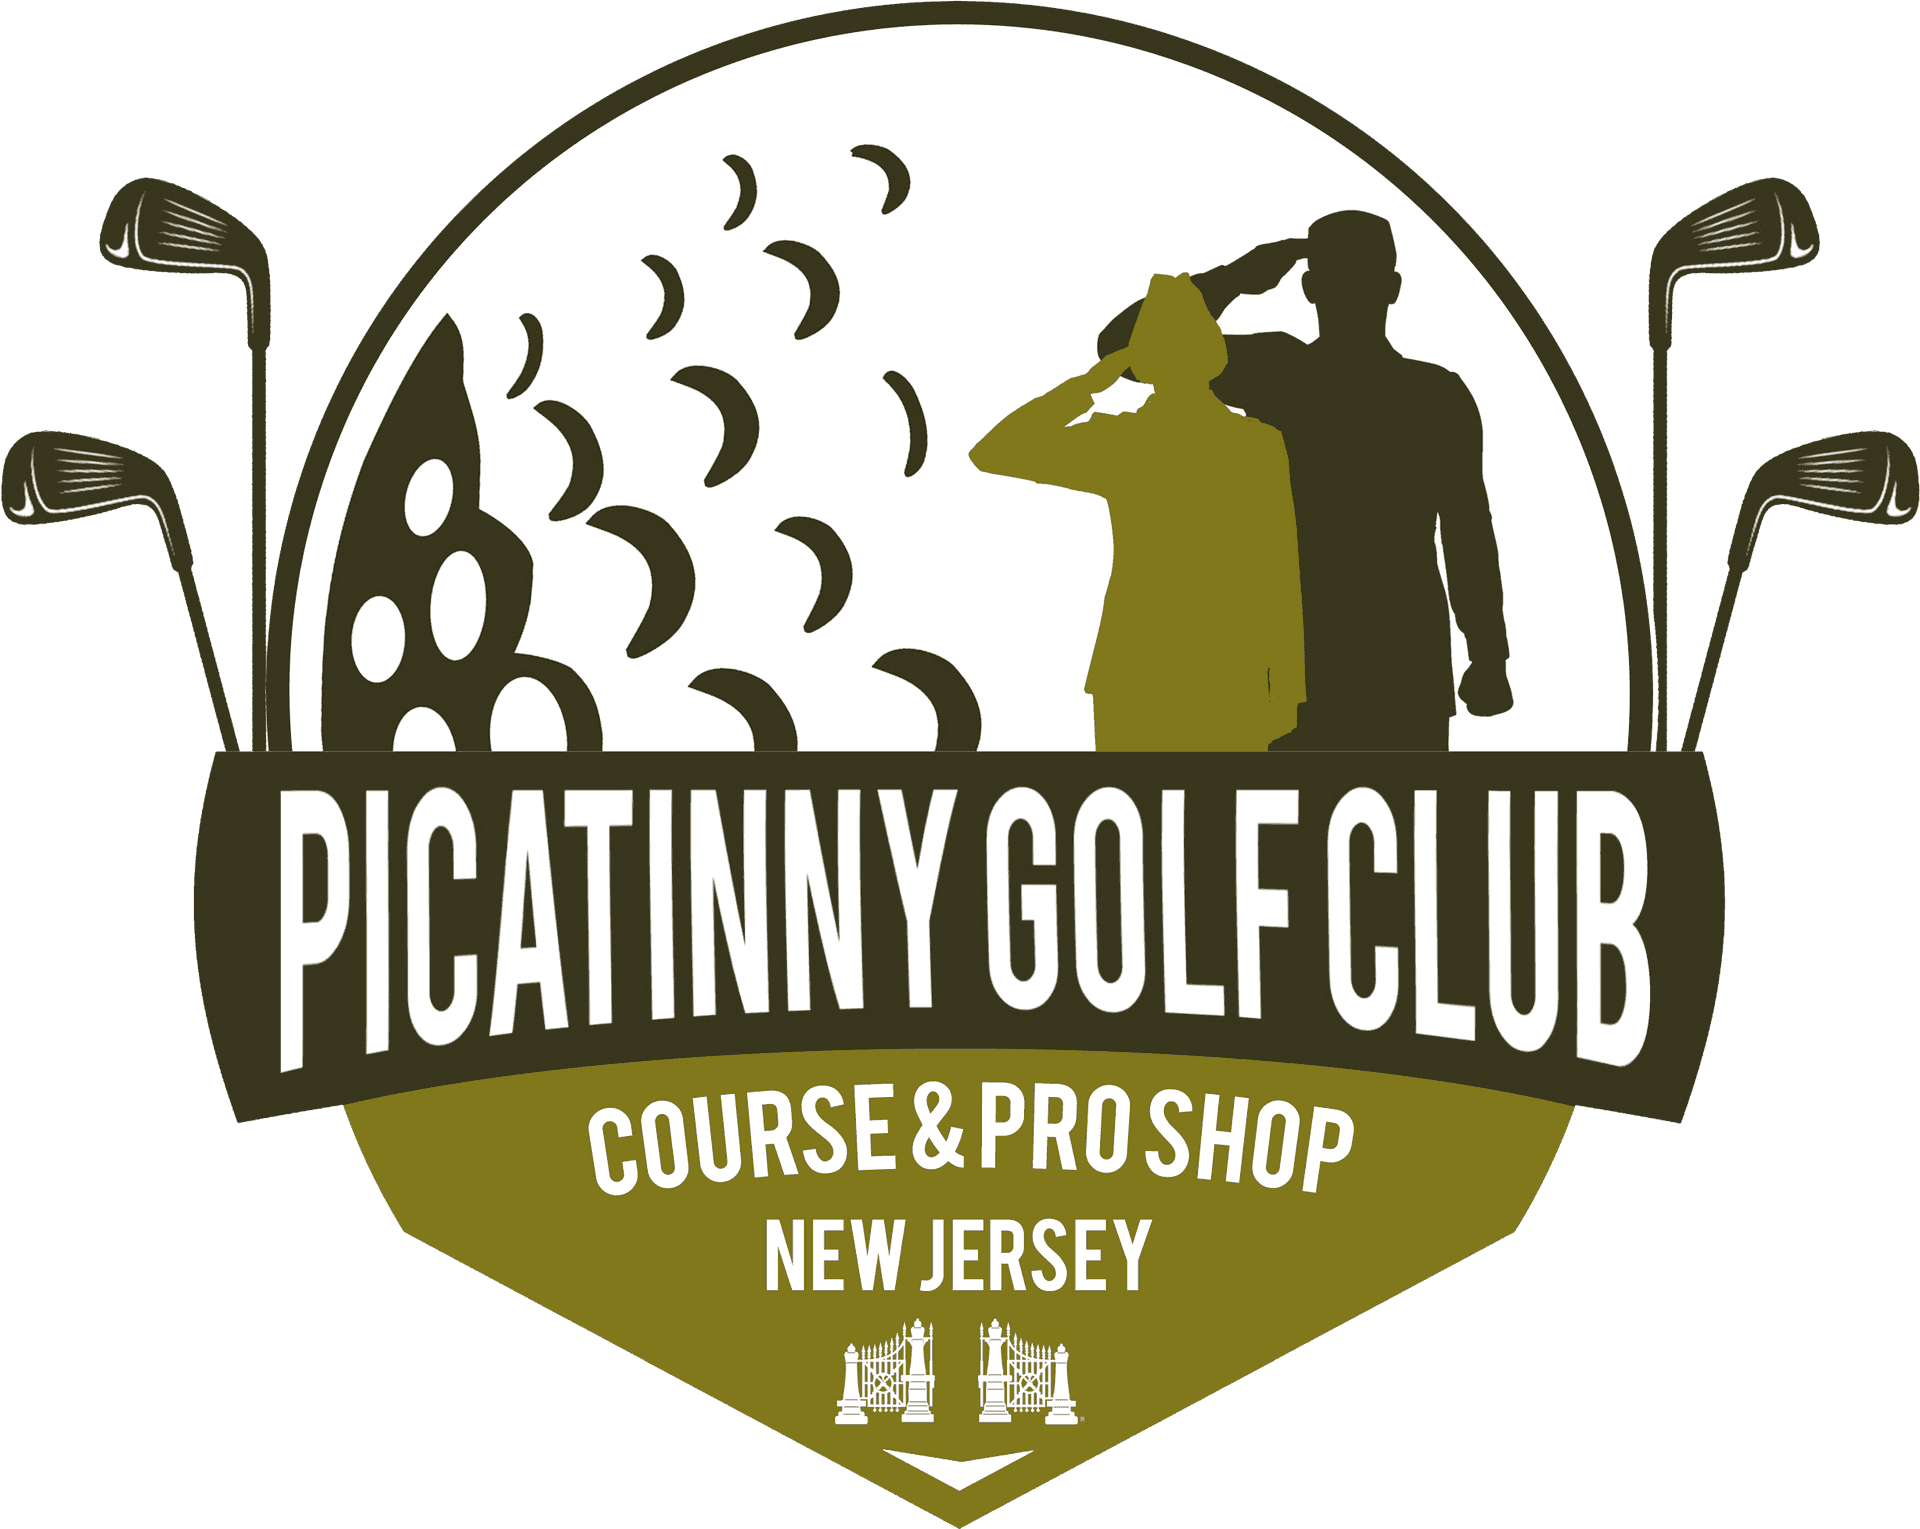 Picatinny Golf Club Logo New Jersey PNG image